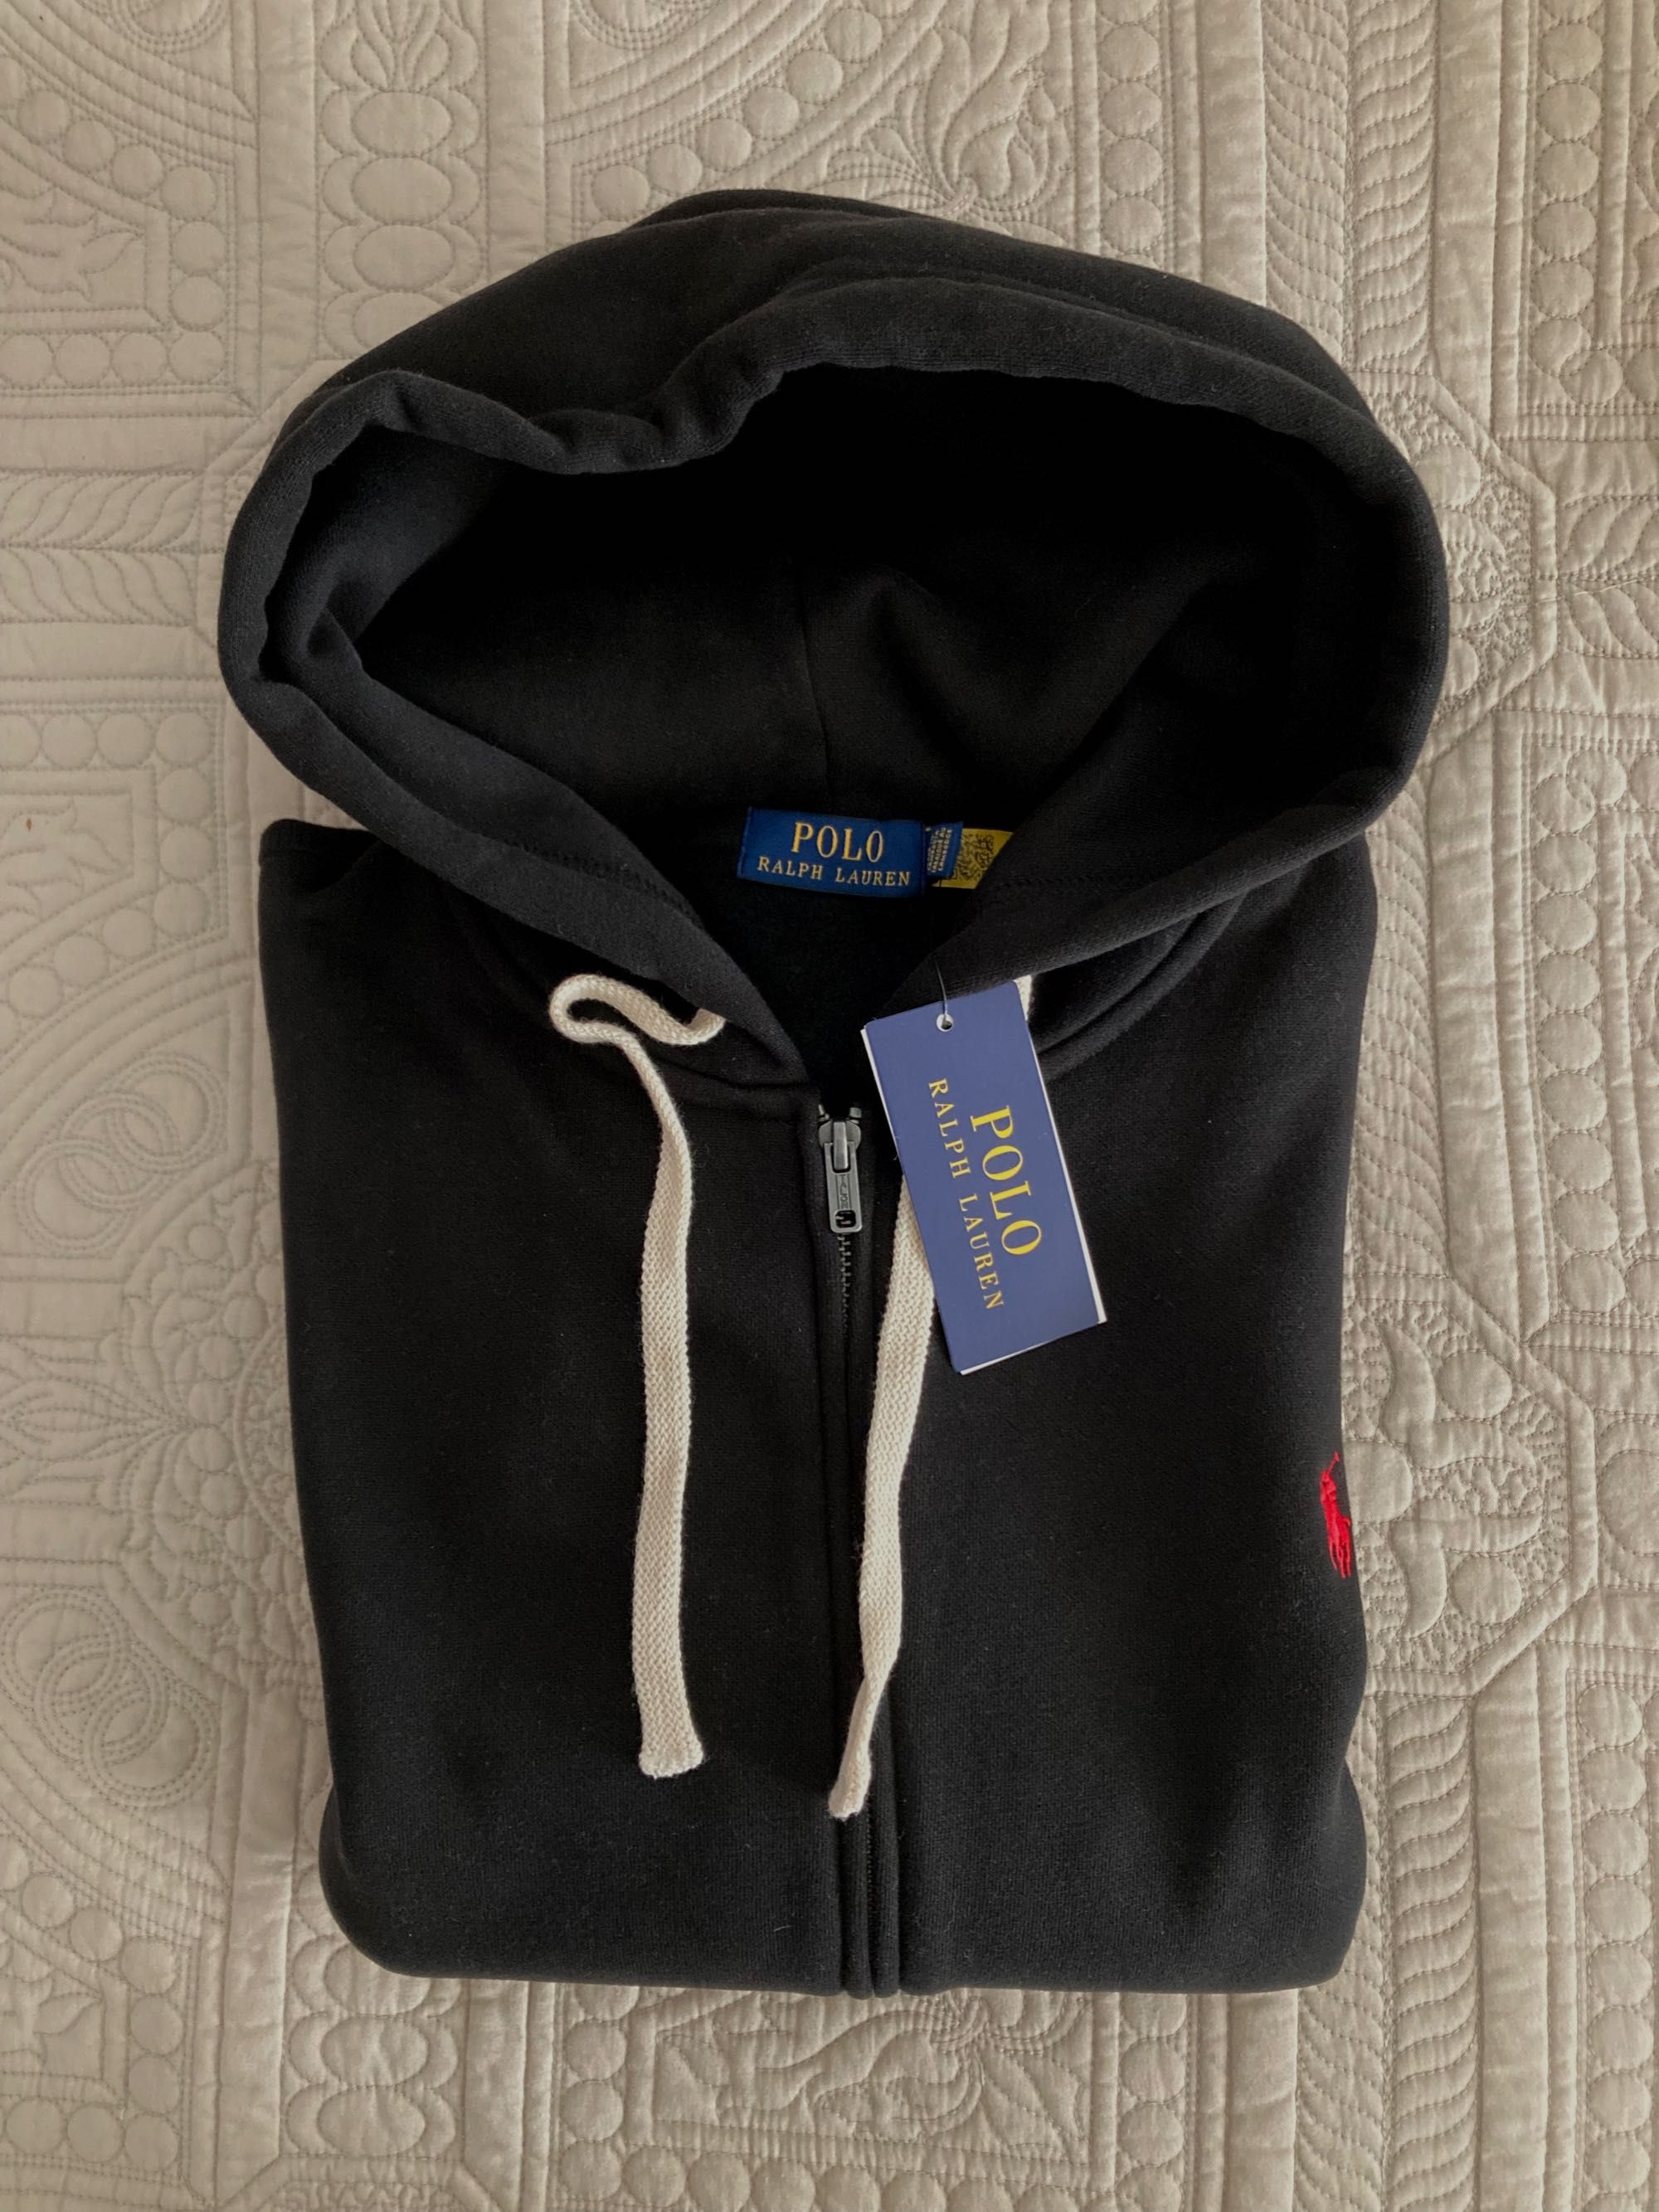 Polo Ralph Lauren // Black Sweat Shirt Hoodie - Size M